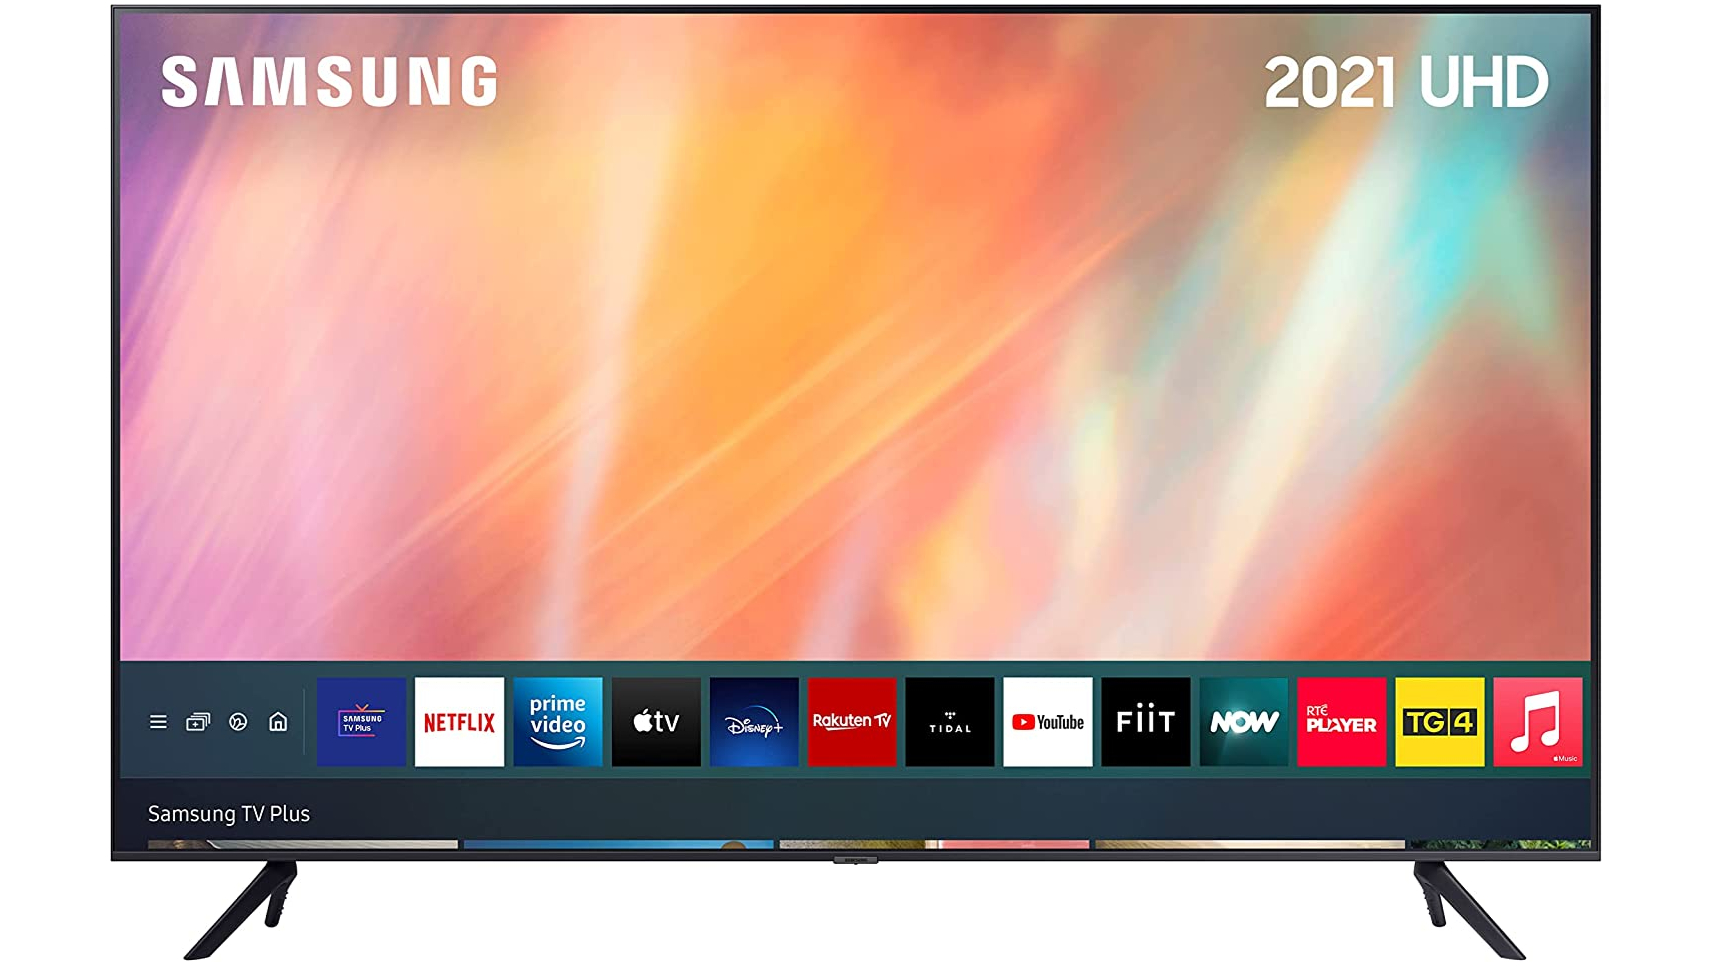 Samsung 4K HDR TV